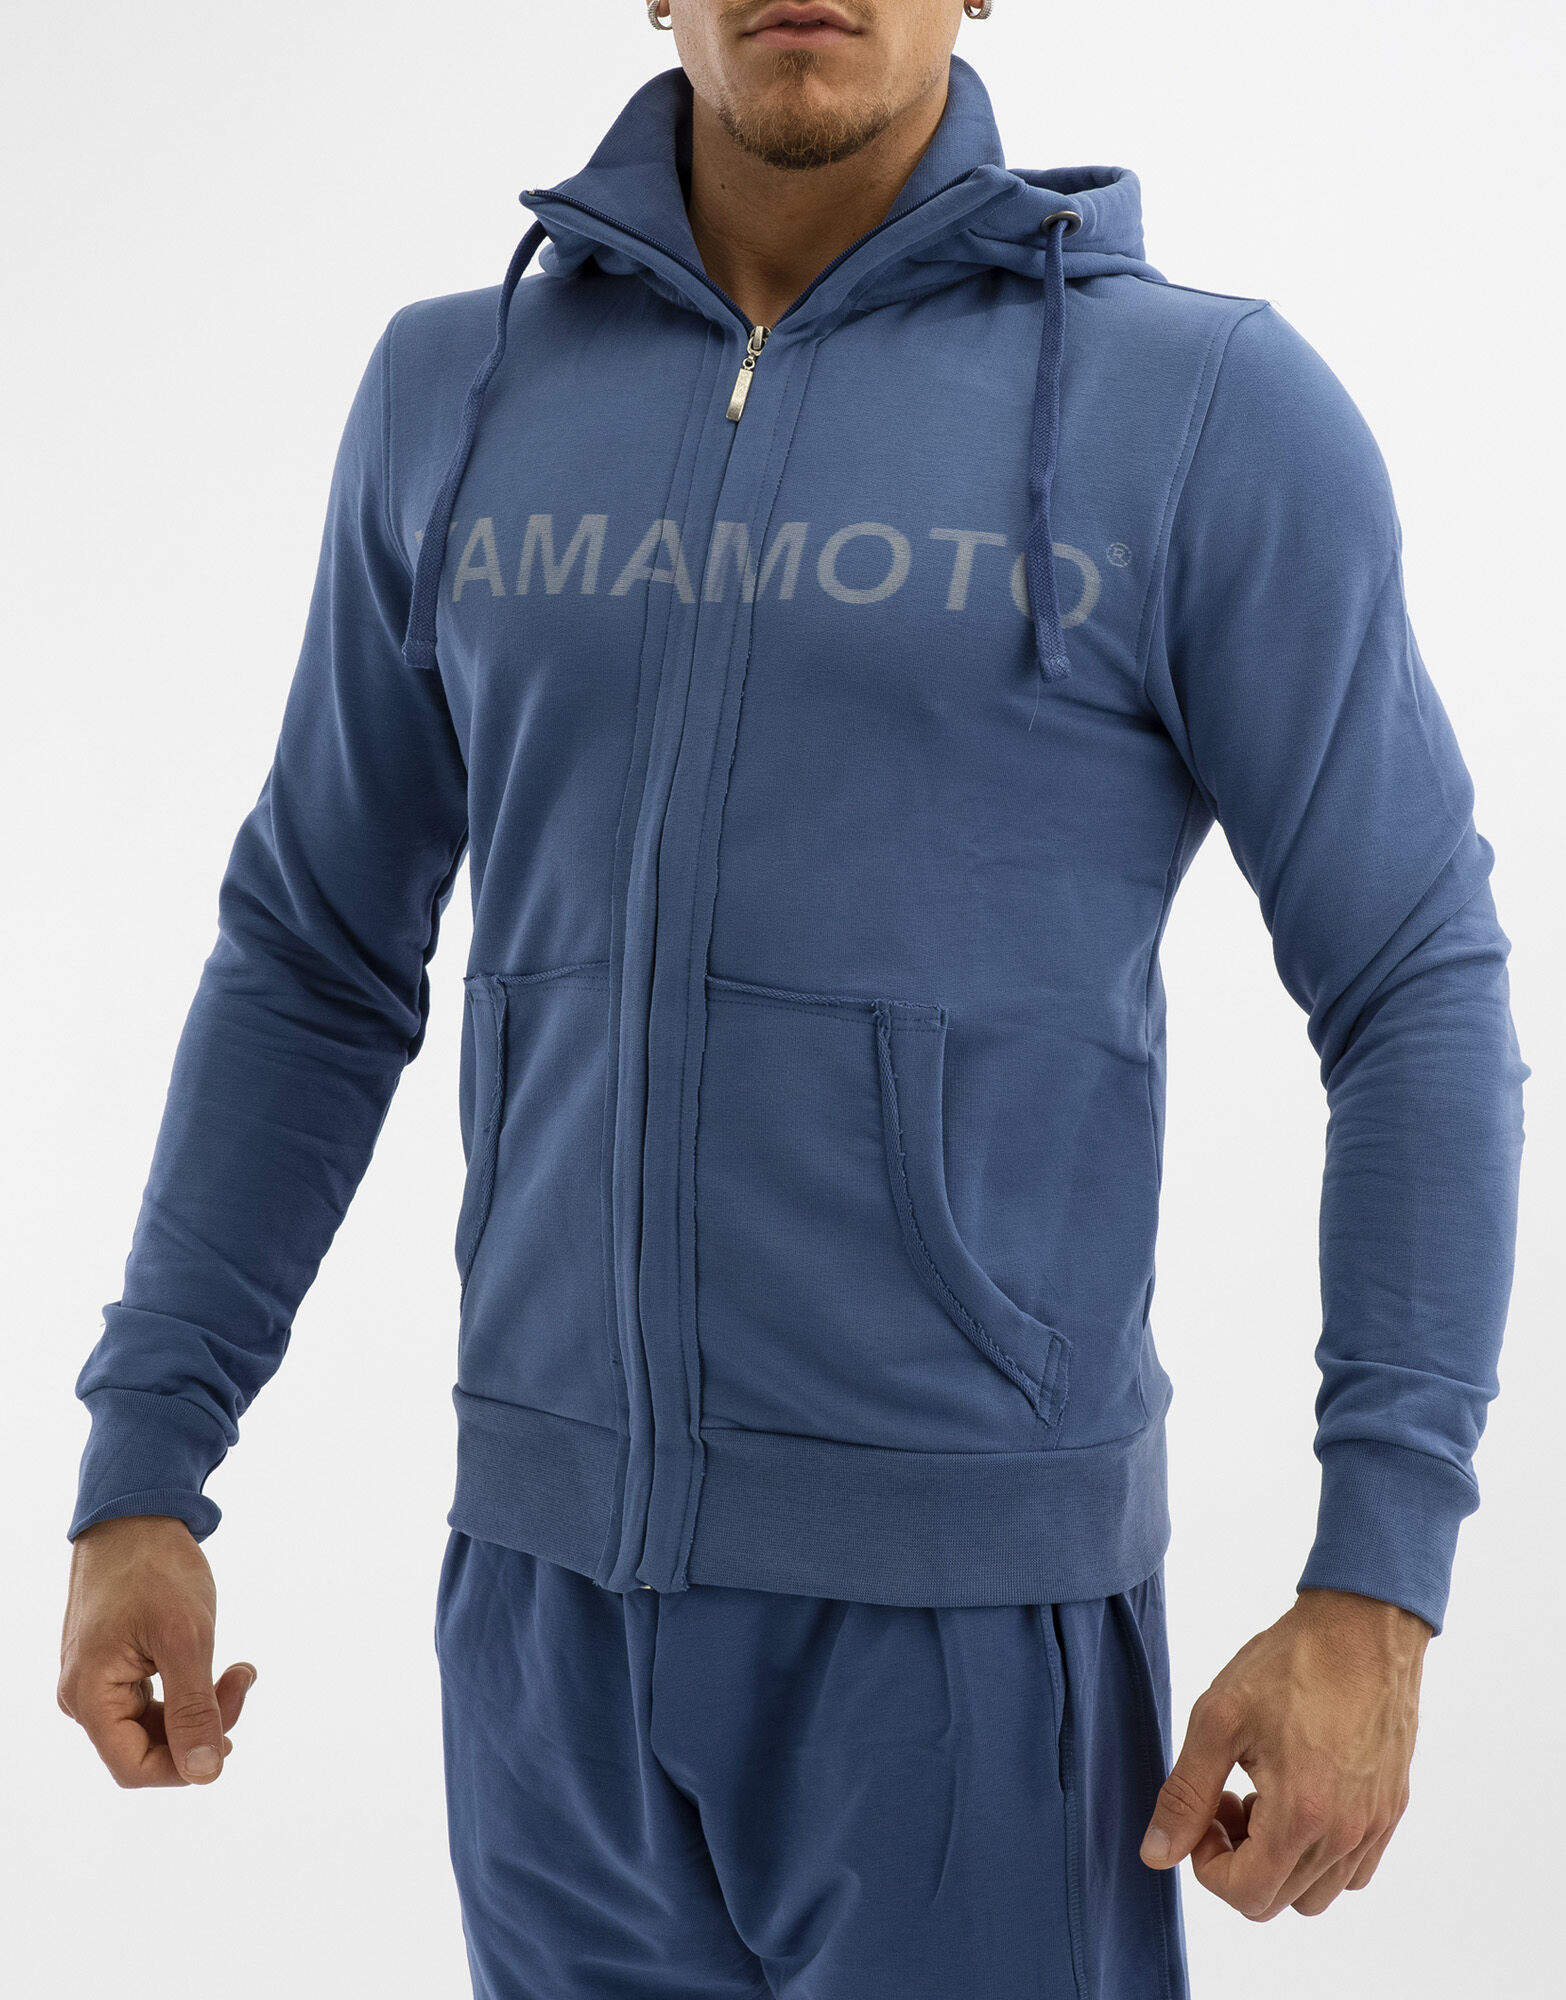 YAMAMOTO OUTFIT Sweatshirt Zip Colore: Navy L